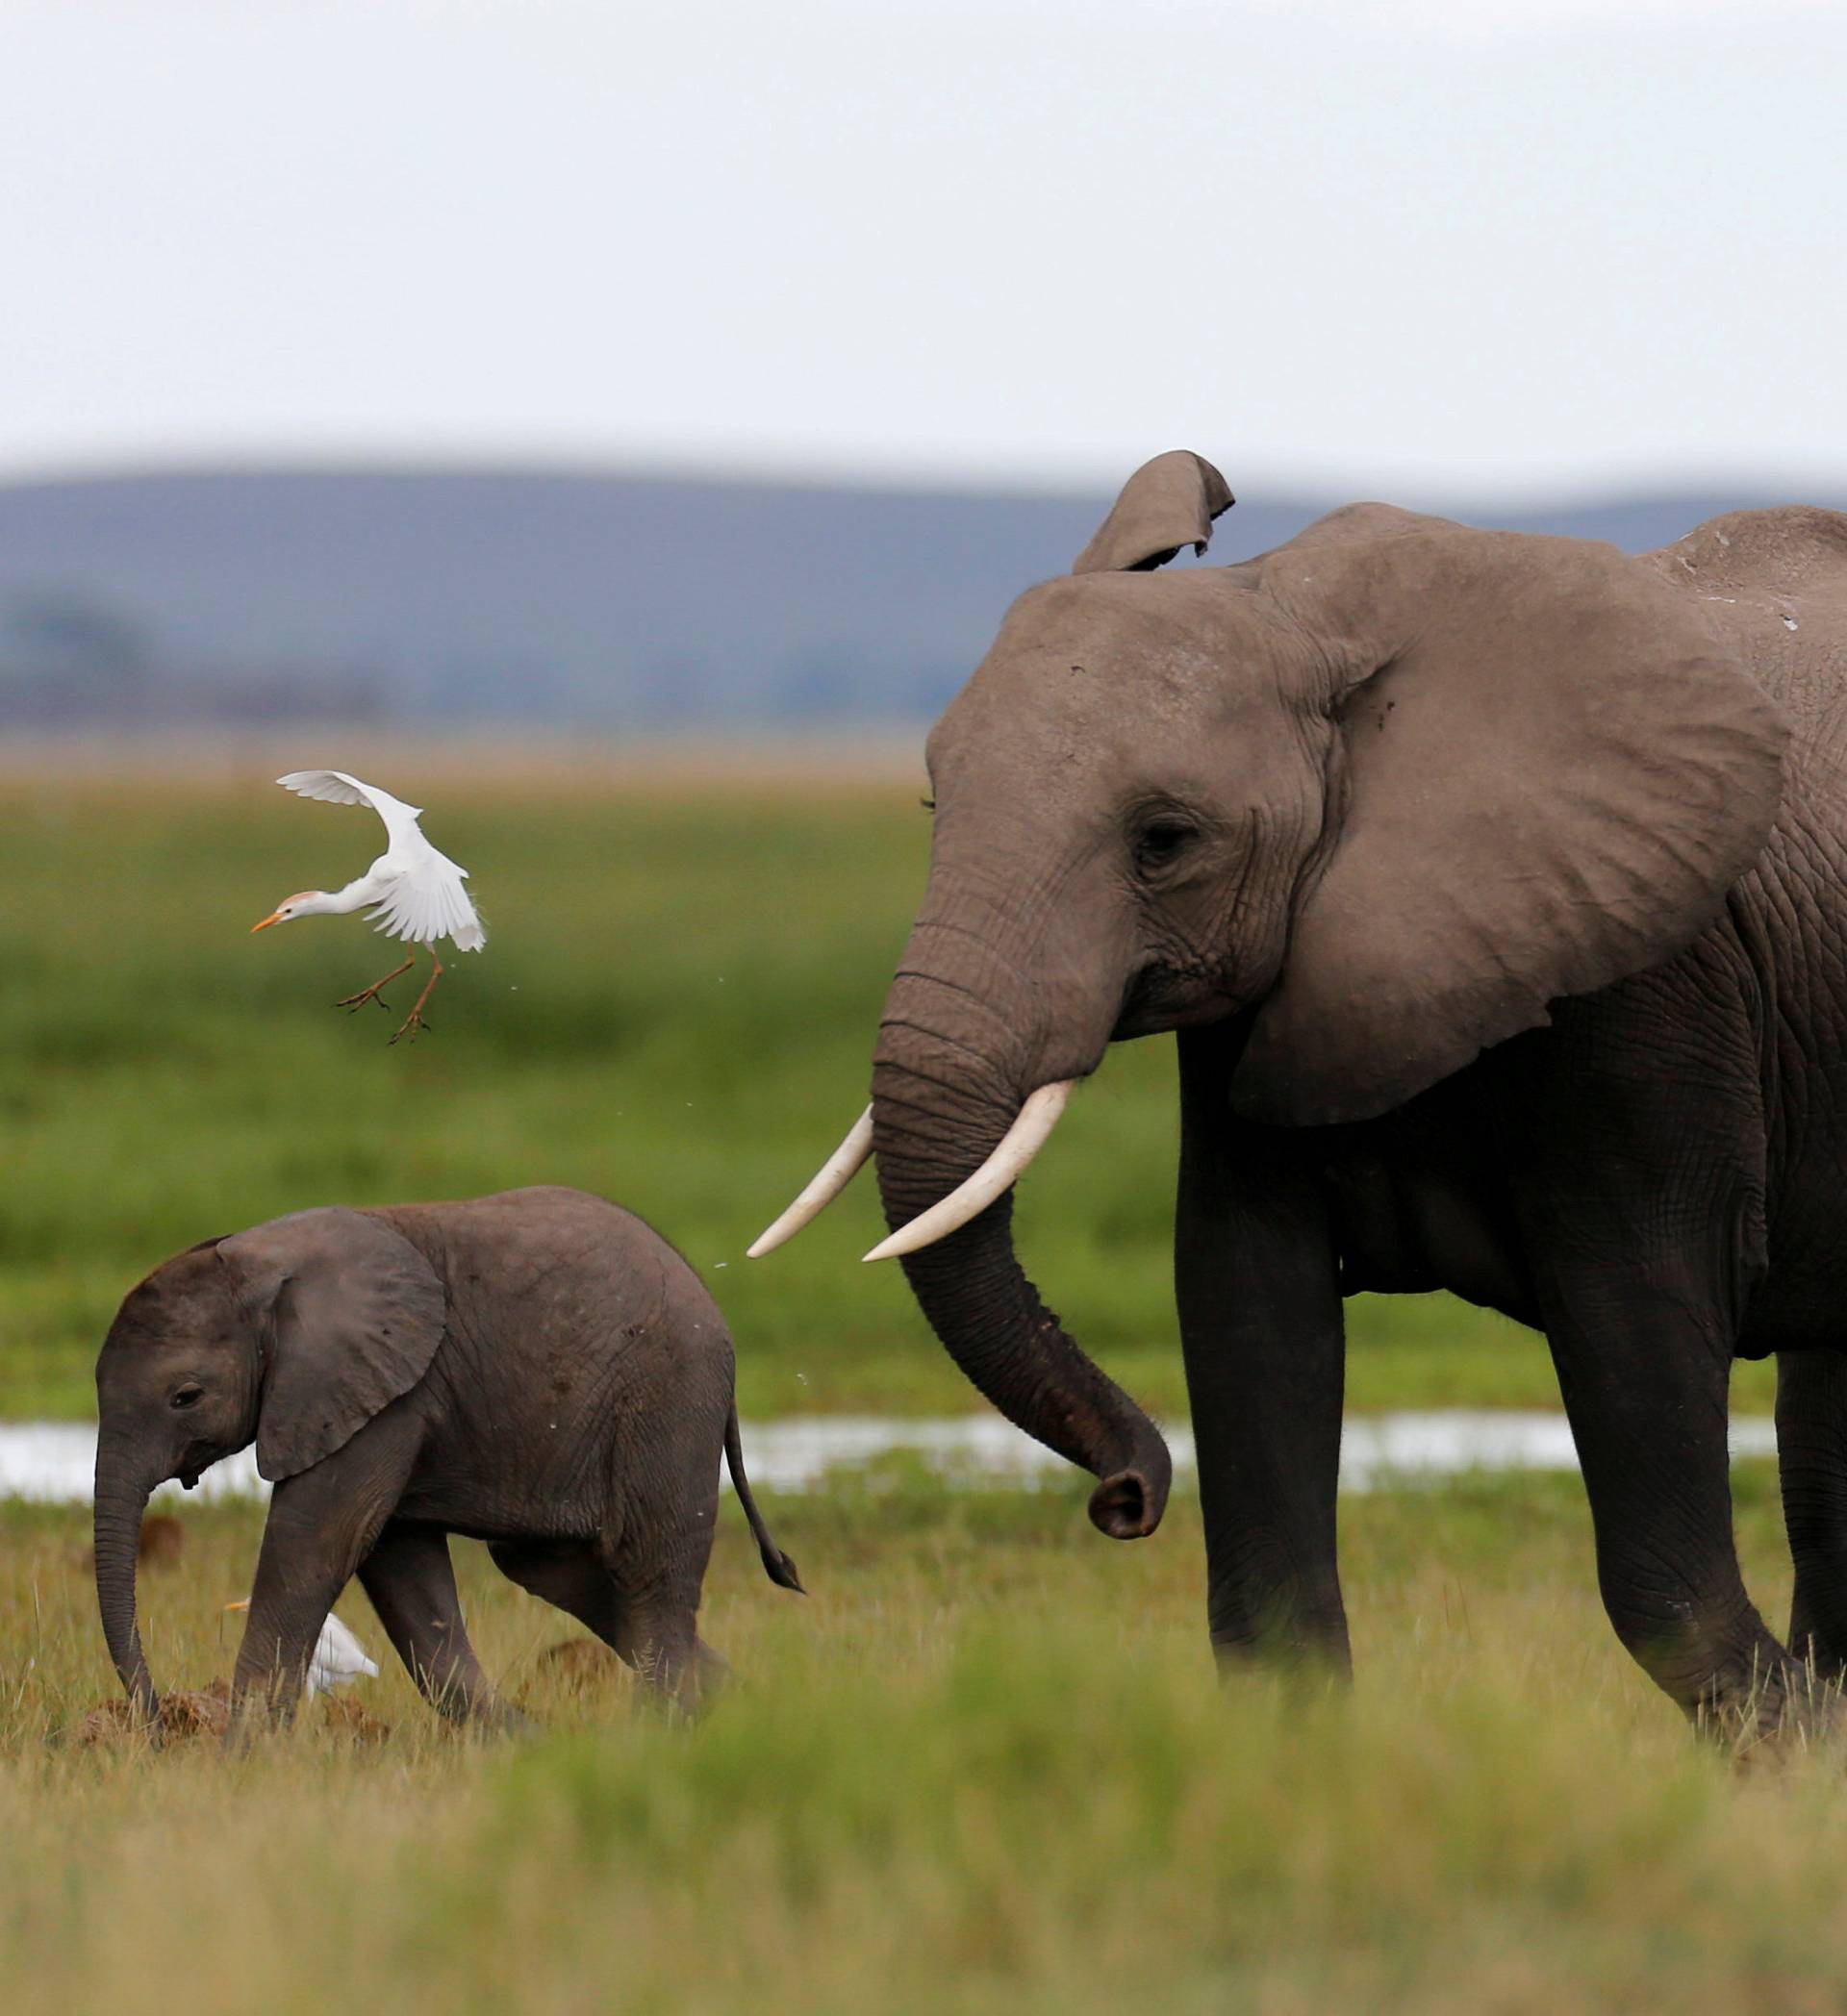 A bird flies over a family of elephants walking in the Amboseli National Park, southeast of Kenya's capital Nairobi